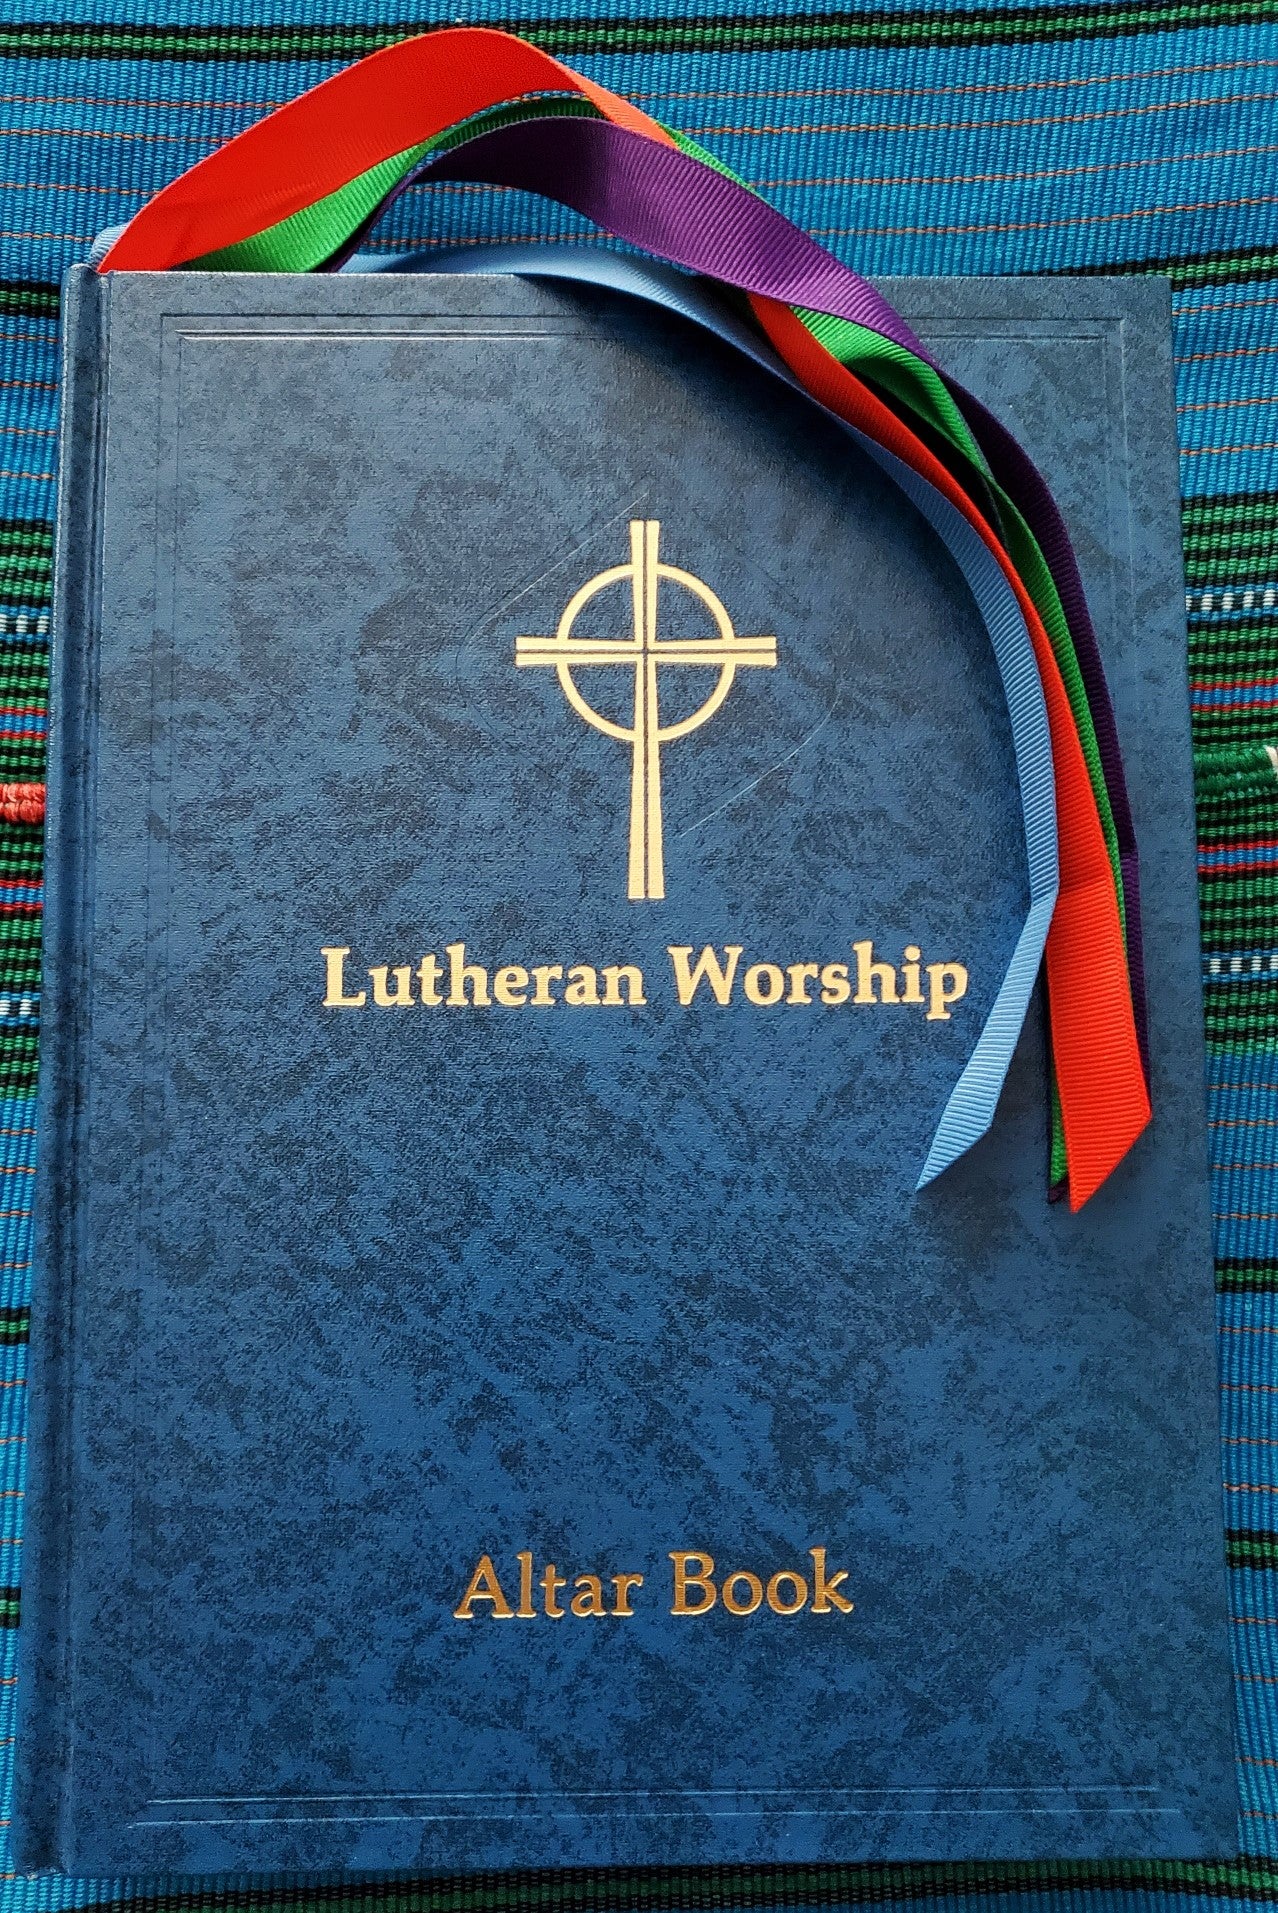 lcms lutheran symbols